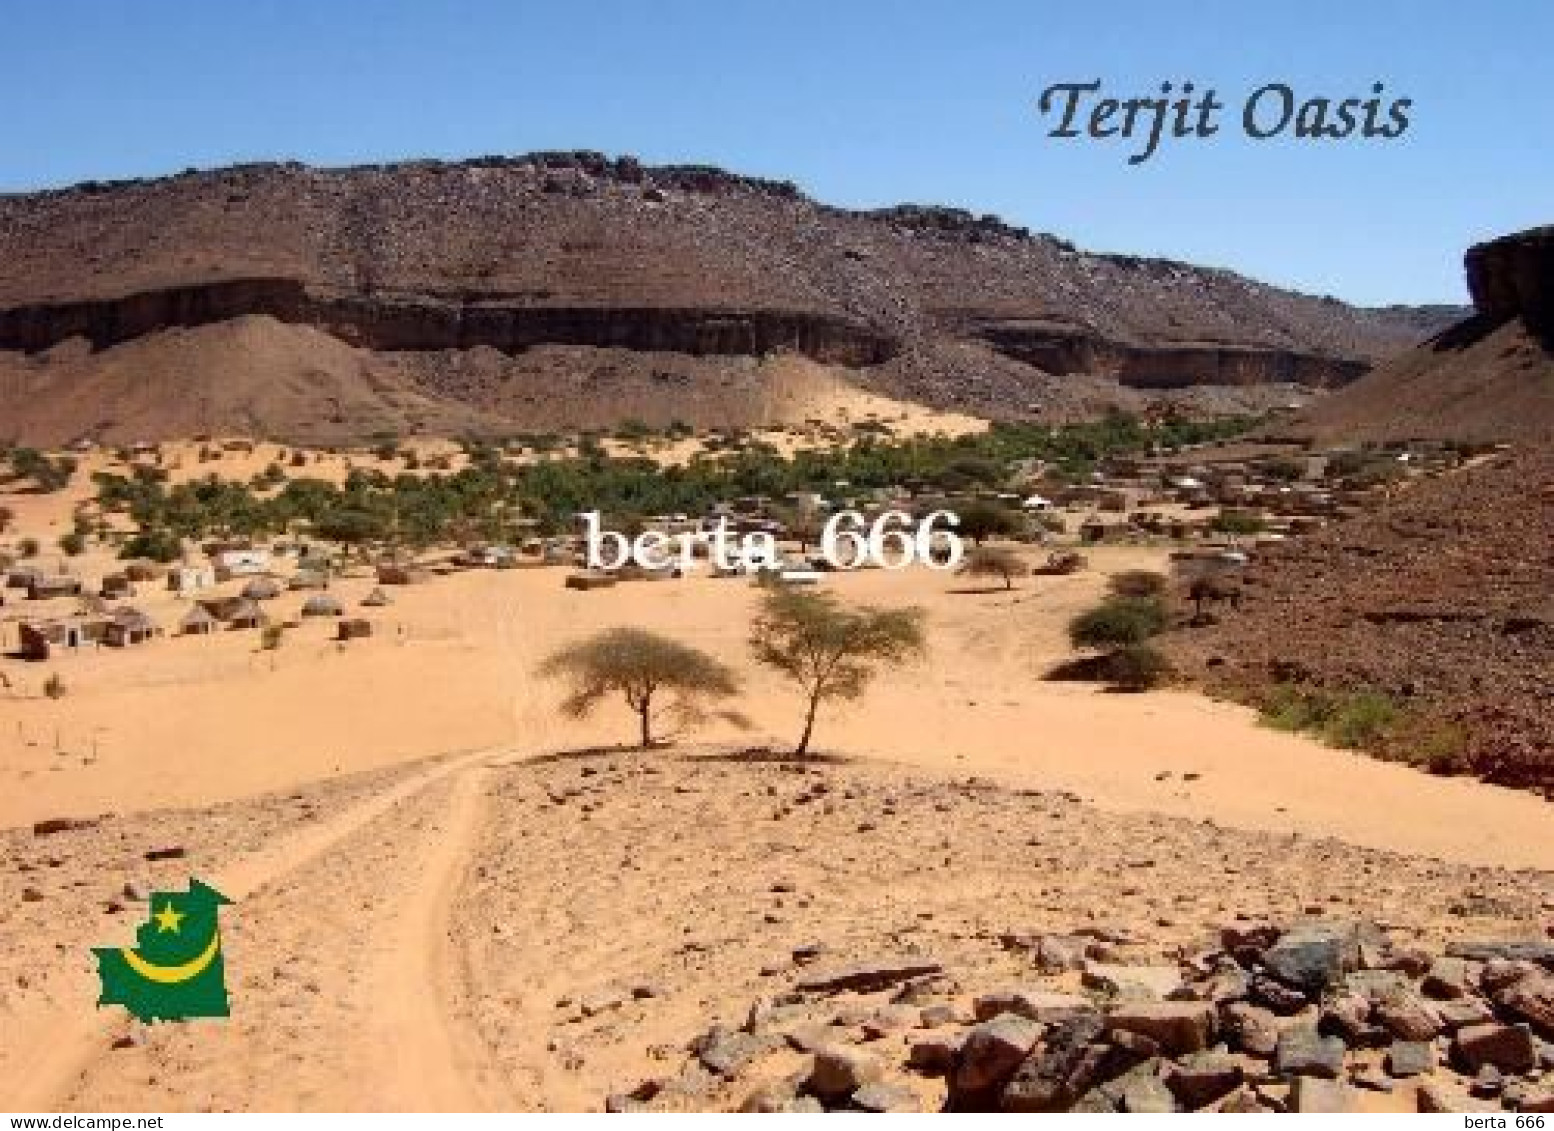 Mauritania Terjit Oasis New Postcard - Mauritanie